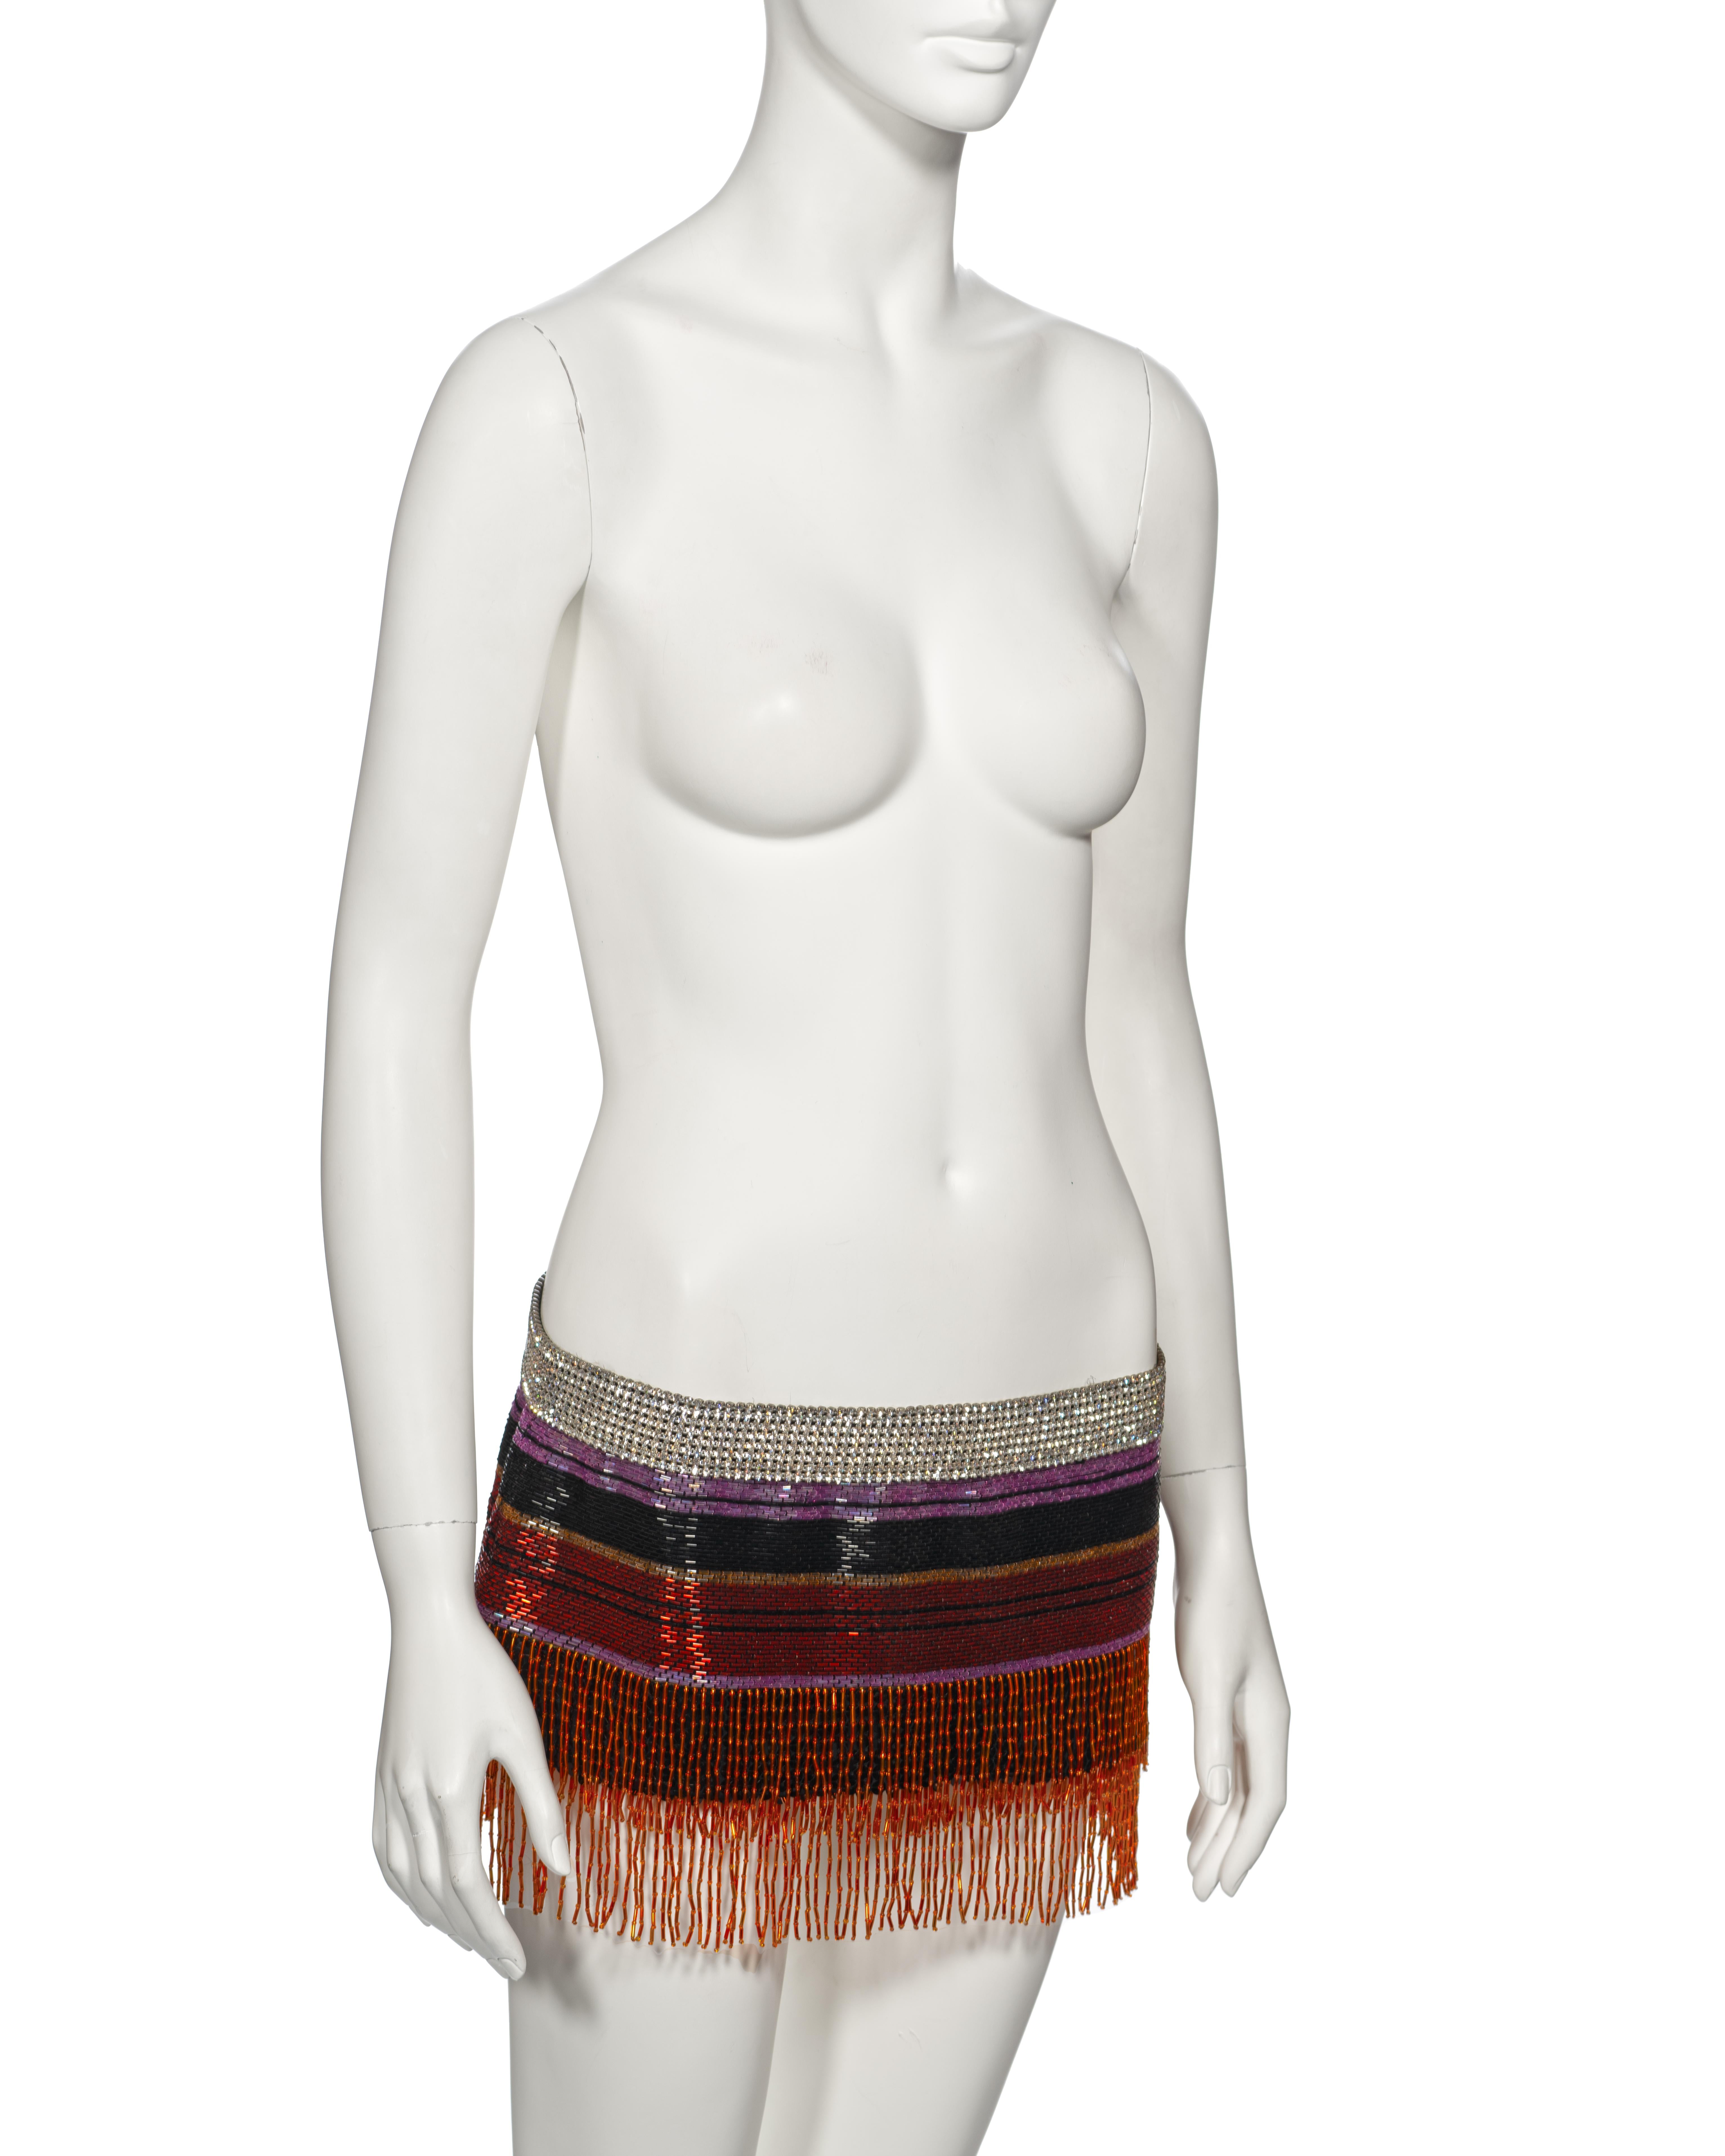 Dolce & Gabbana Beaded Micro Mini Skirt with Swarovski Crystals, ss 2000 For Sale 1